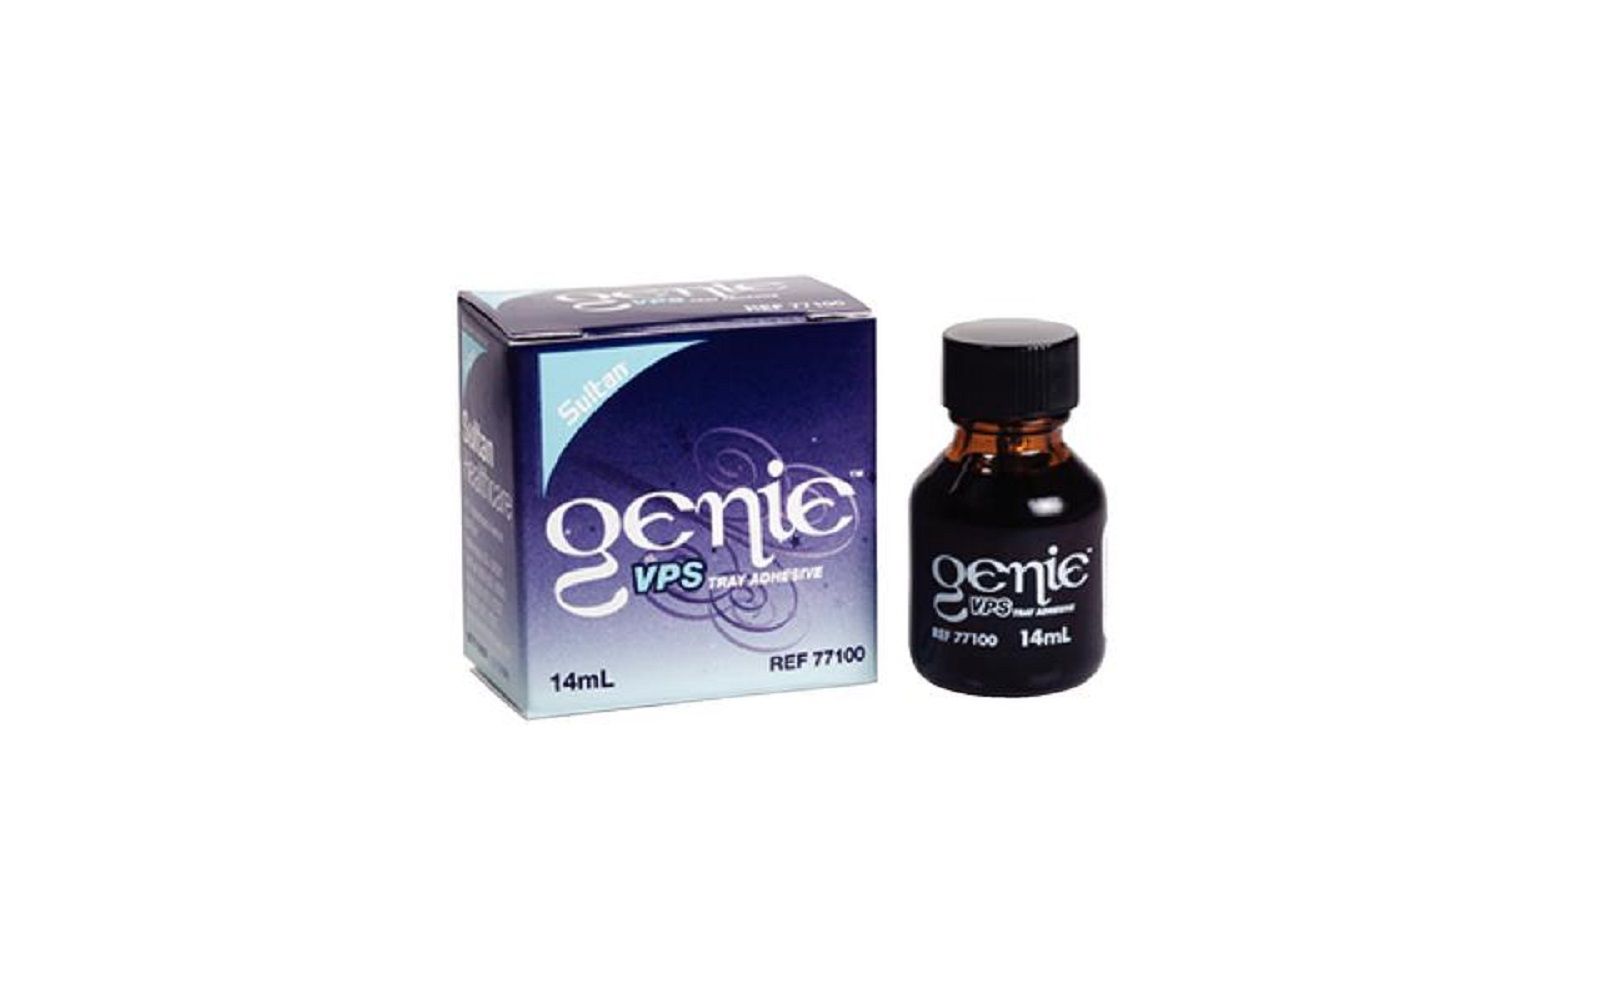 Genie® vps tray adhesive refill, 14 ml bottle